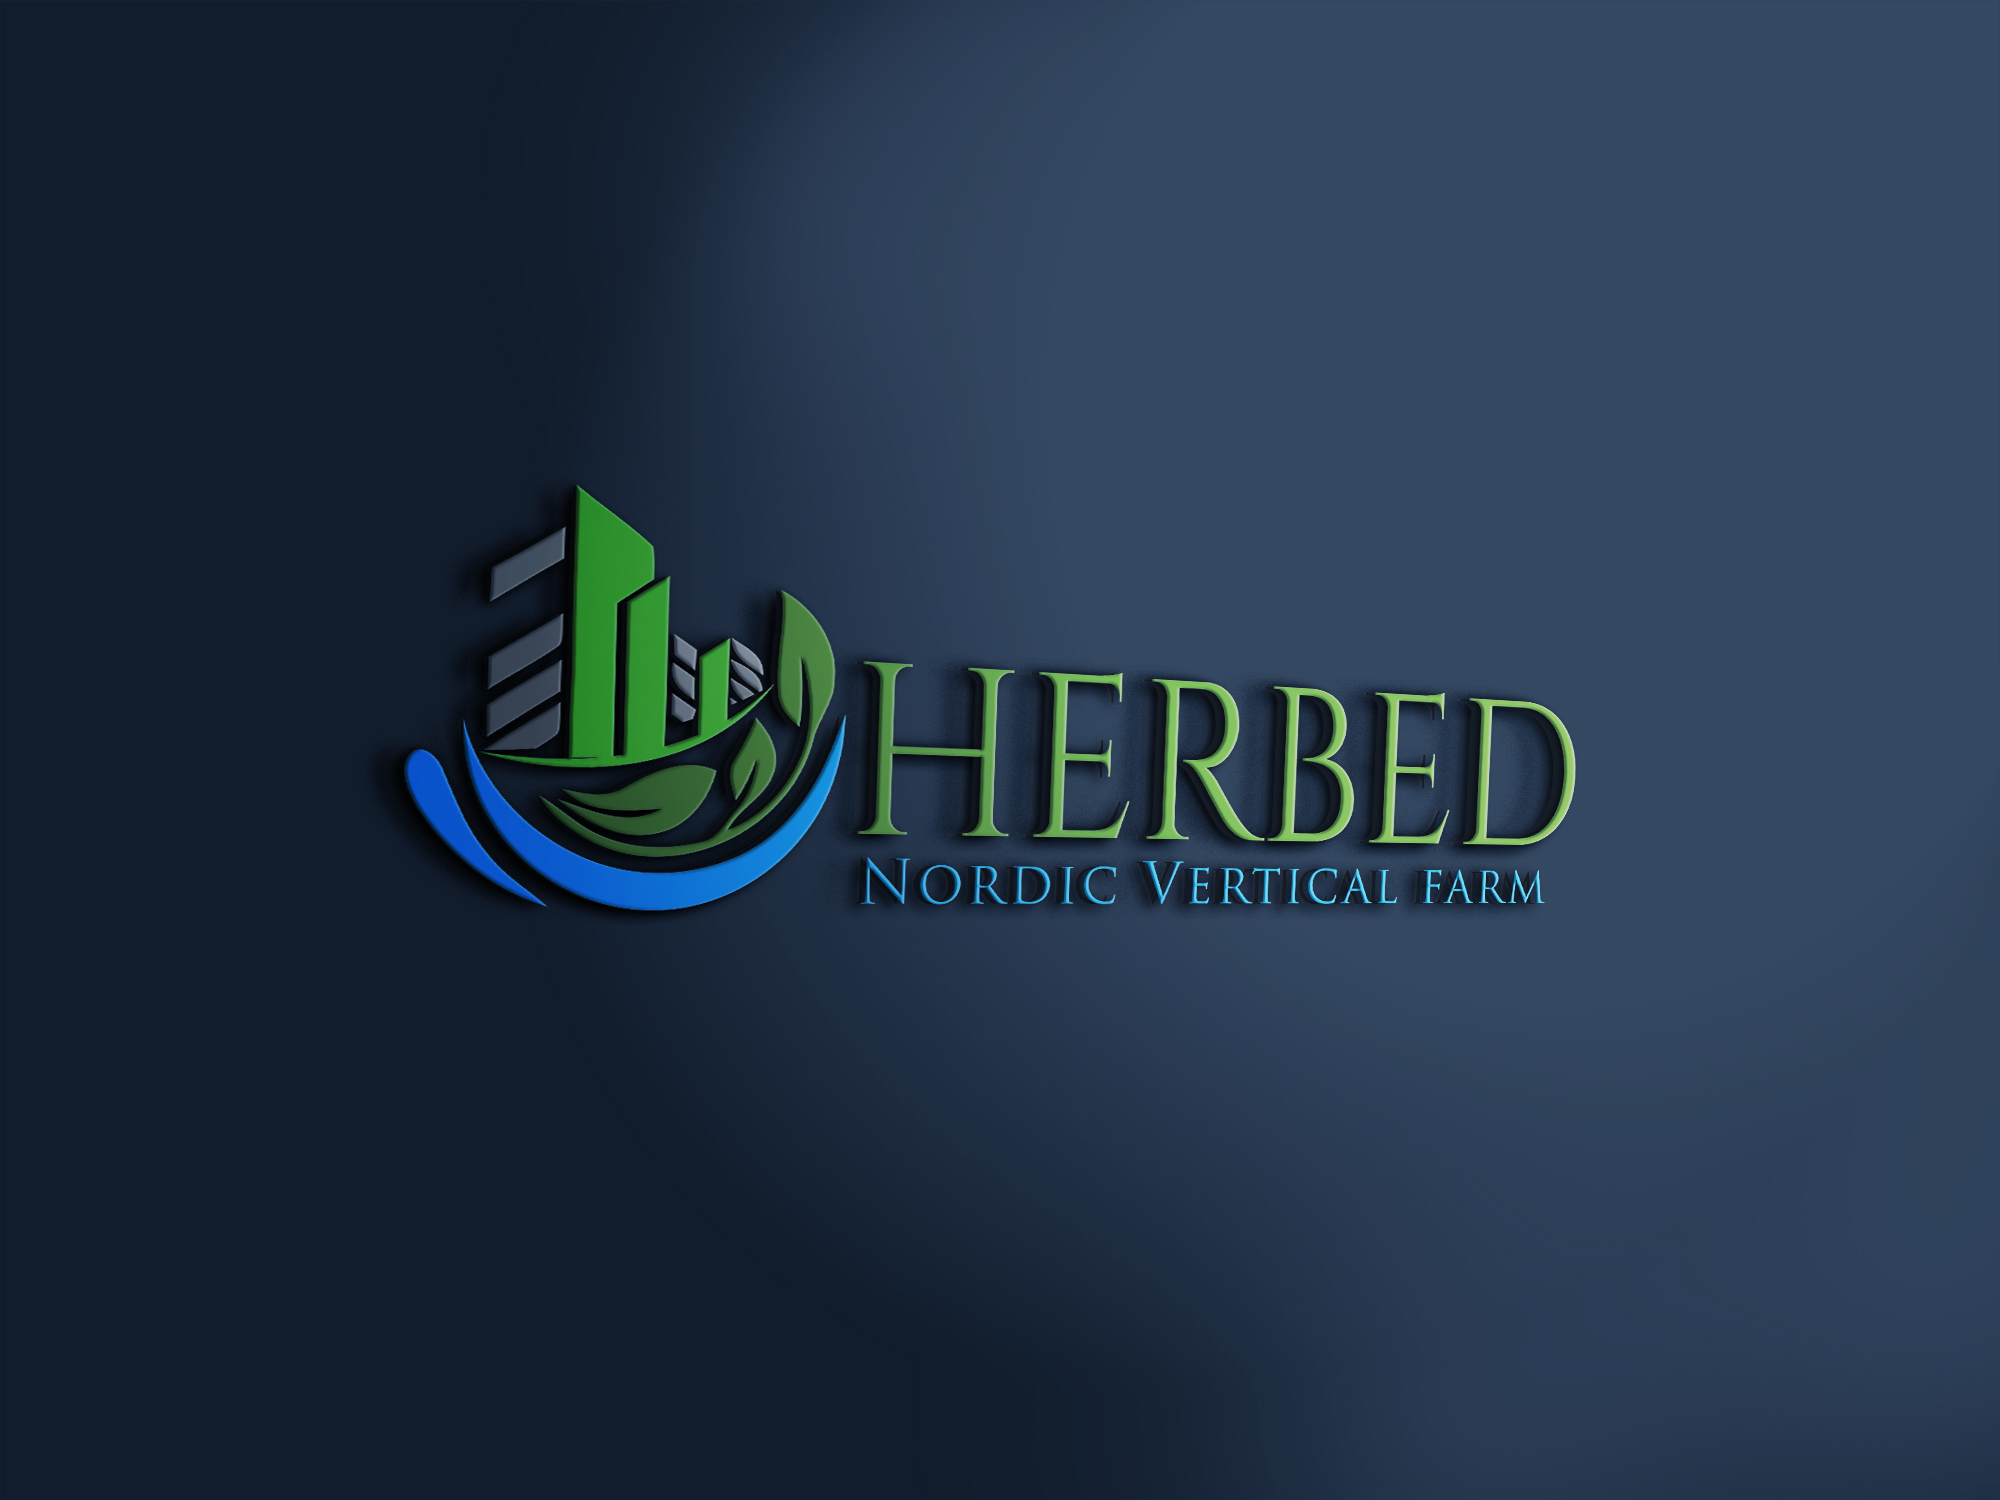 Herbed Nordic Vertical Farm